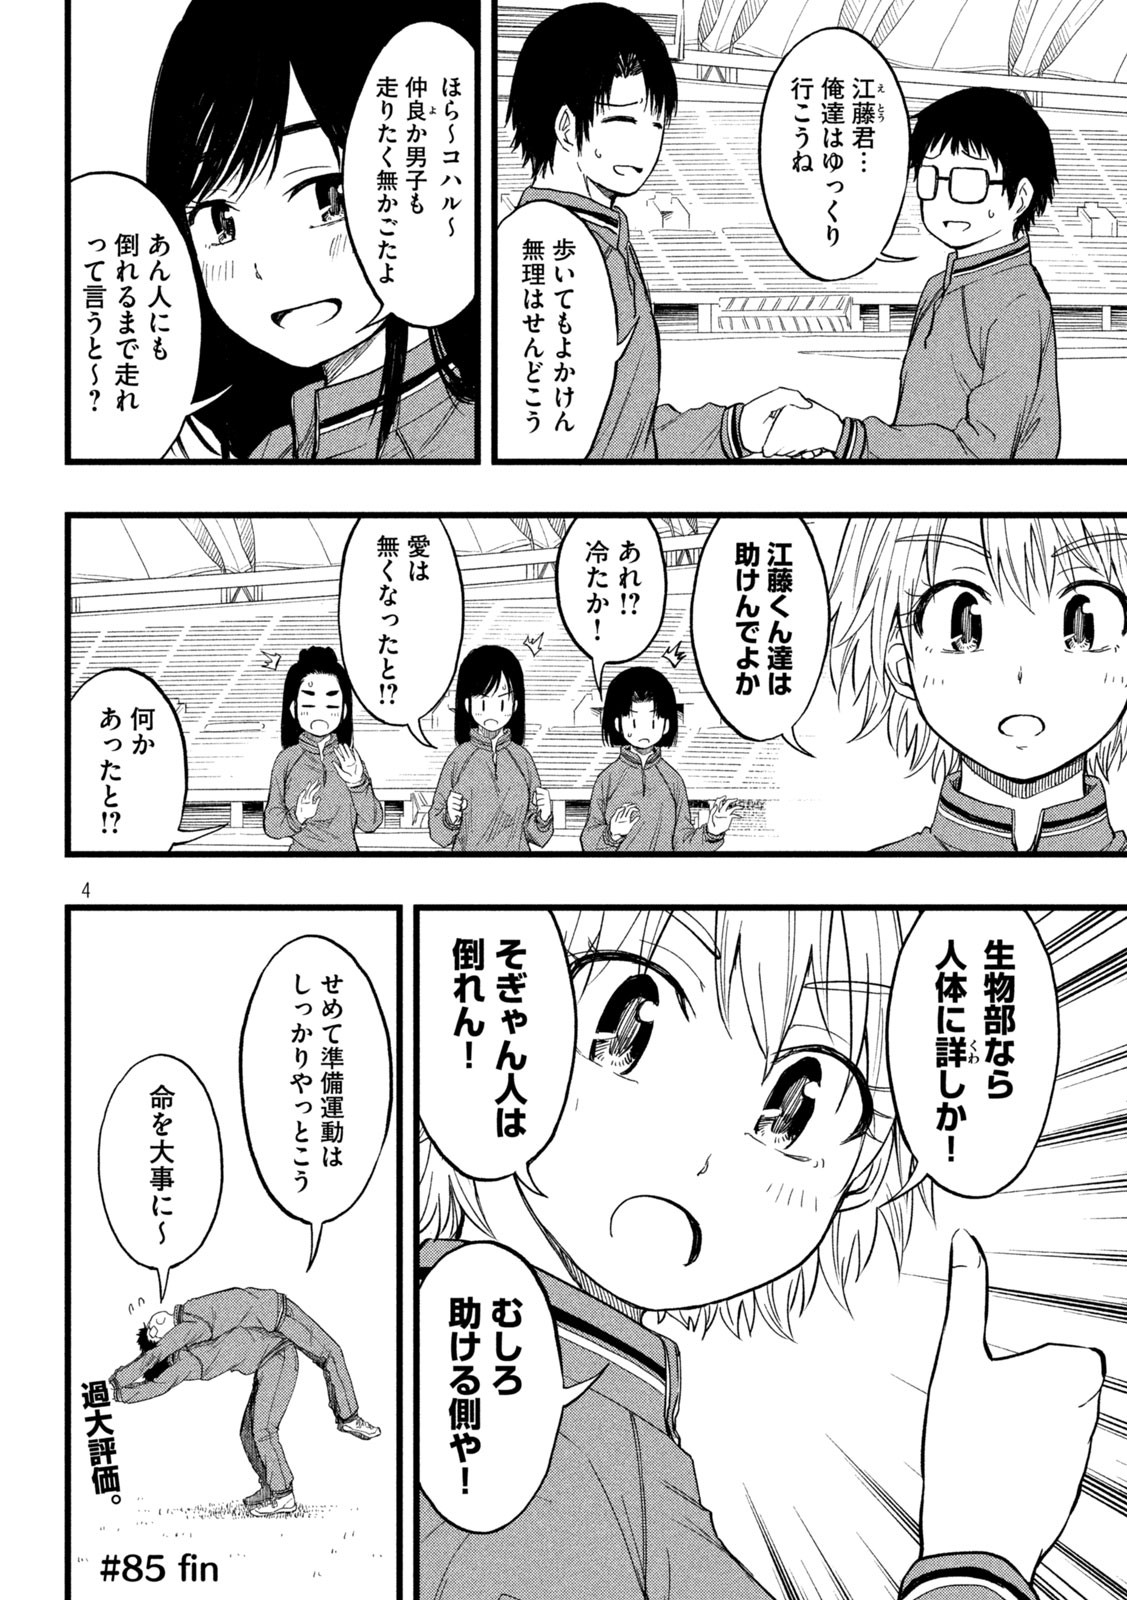 Koharu haru! - Chapter 85 - Page 4